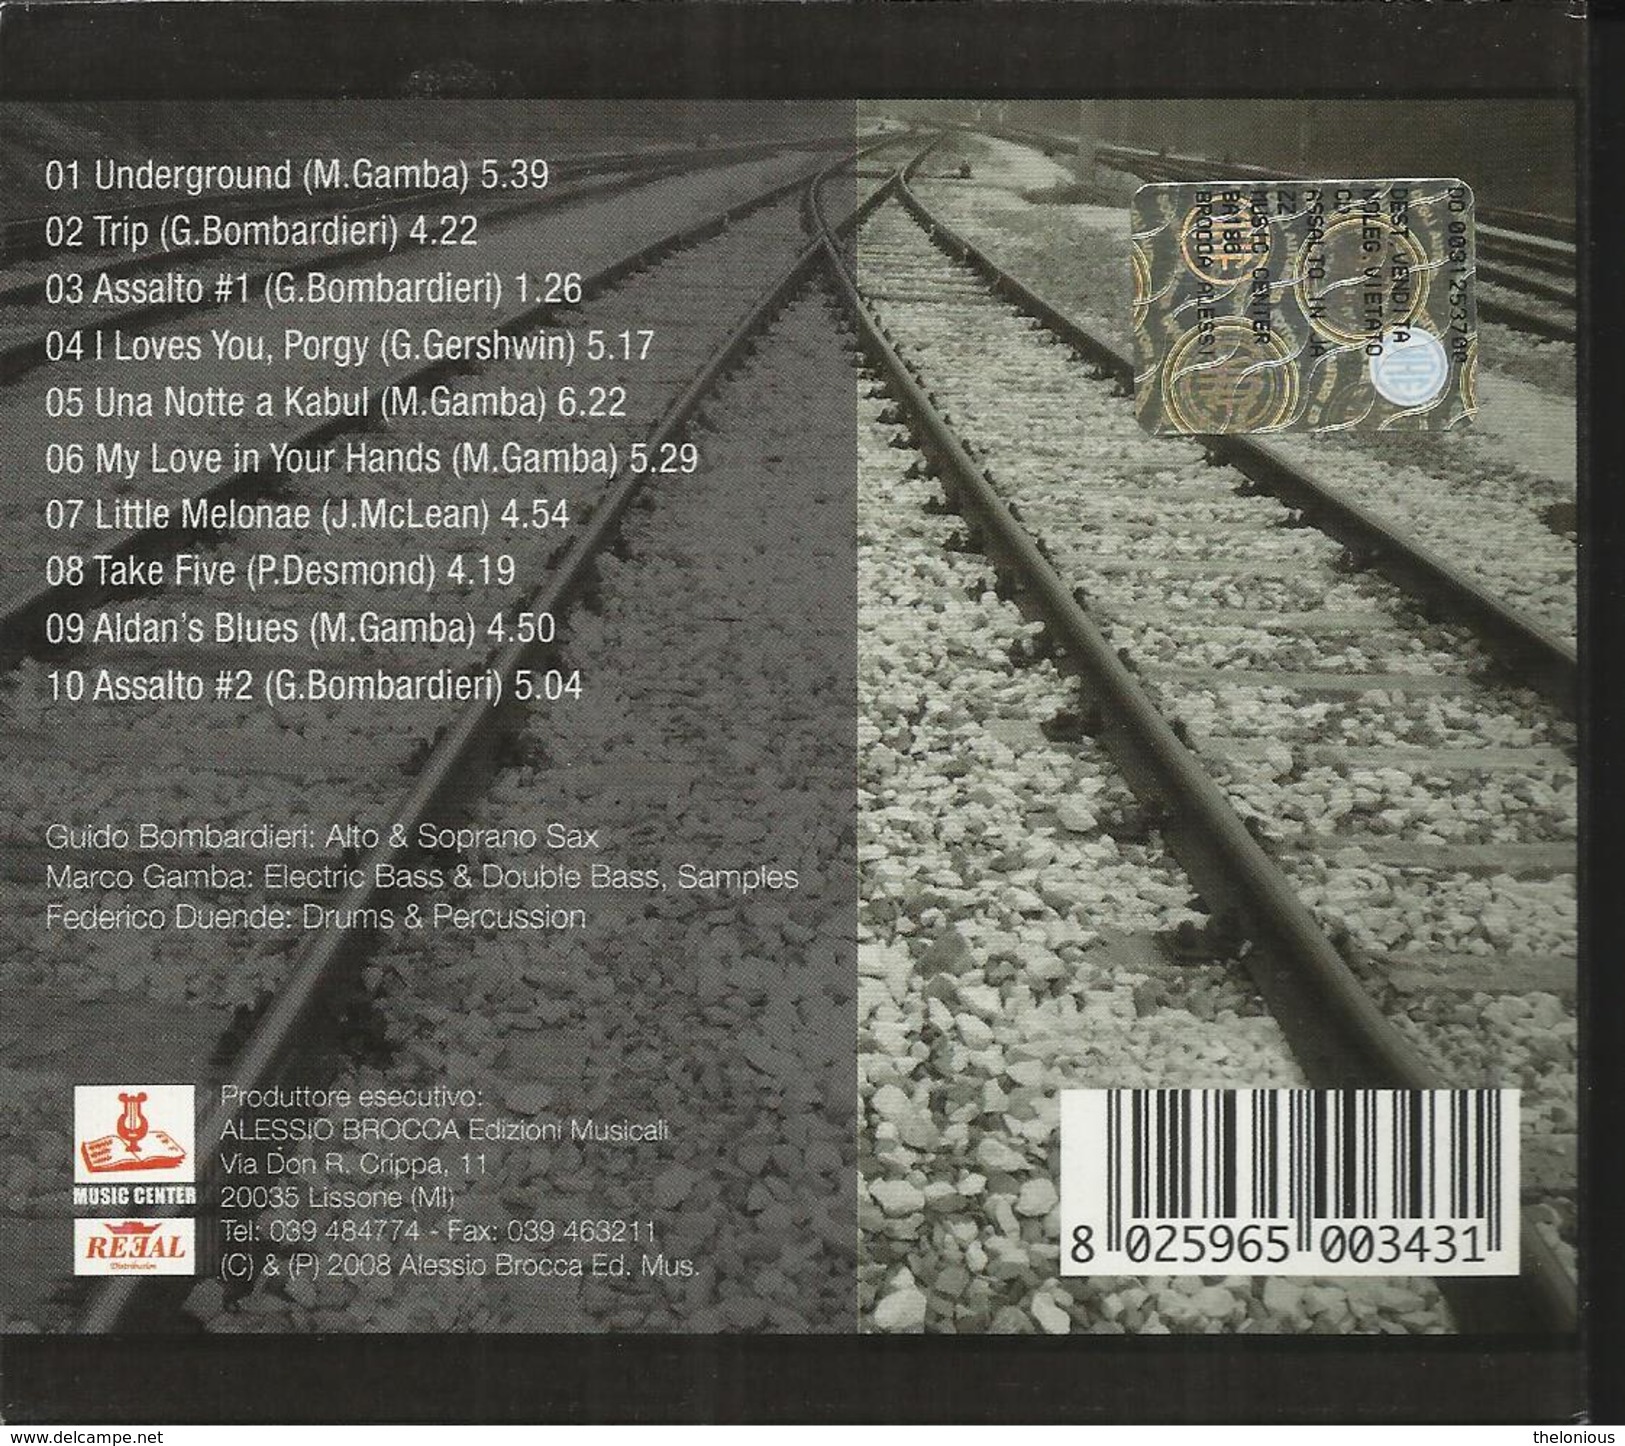 # CD: Guido Bombardieri "Assalto In Jazz" - Music Center BA 186 CD - Jazz